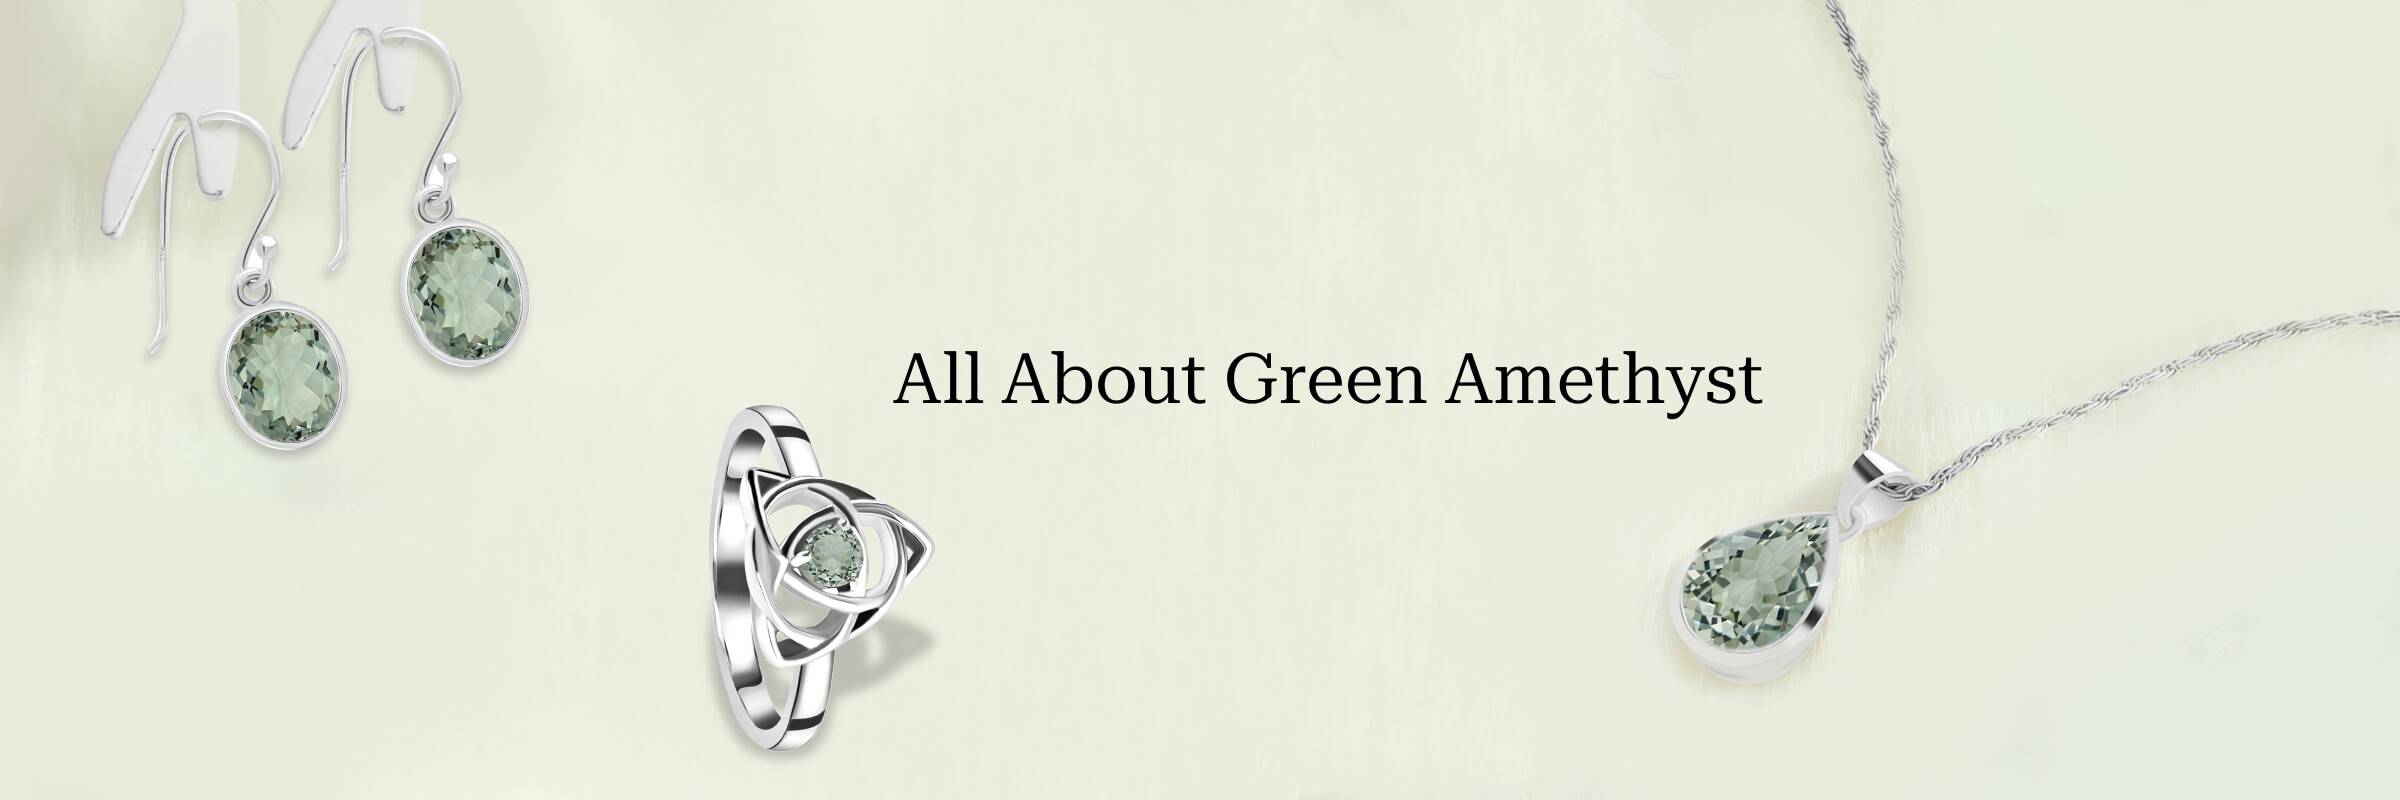 Green Amethyst Benefits